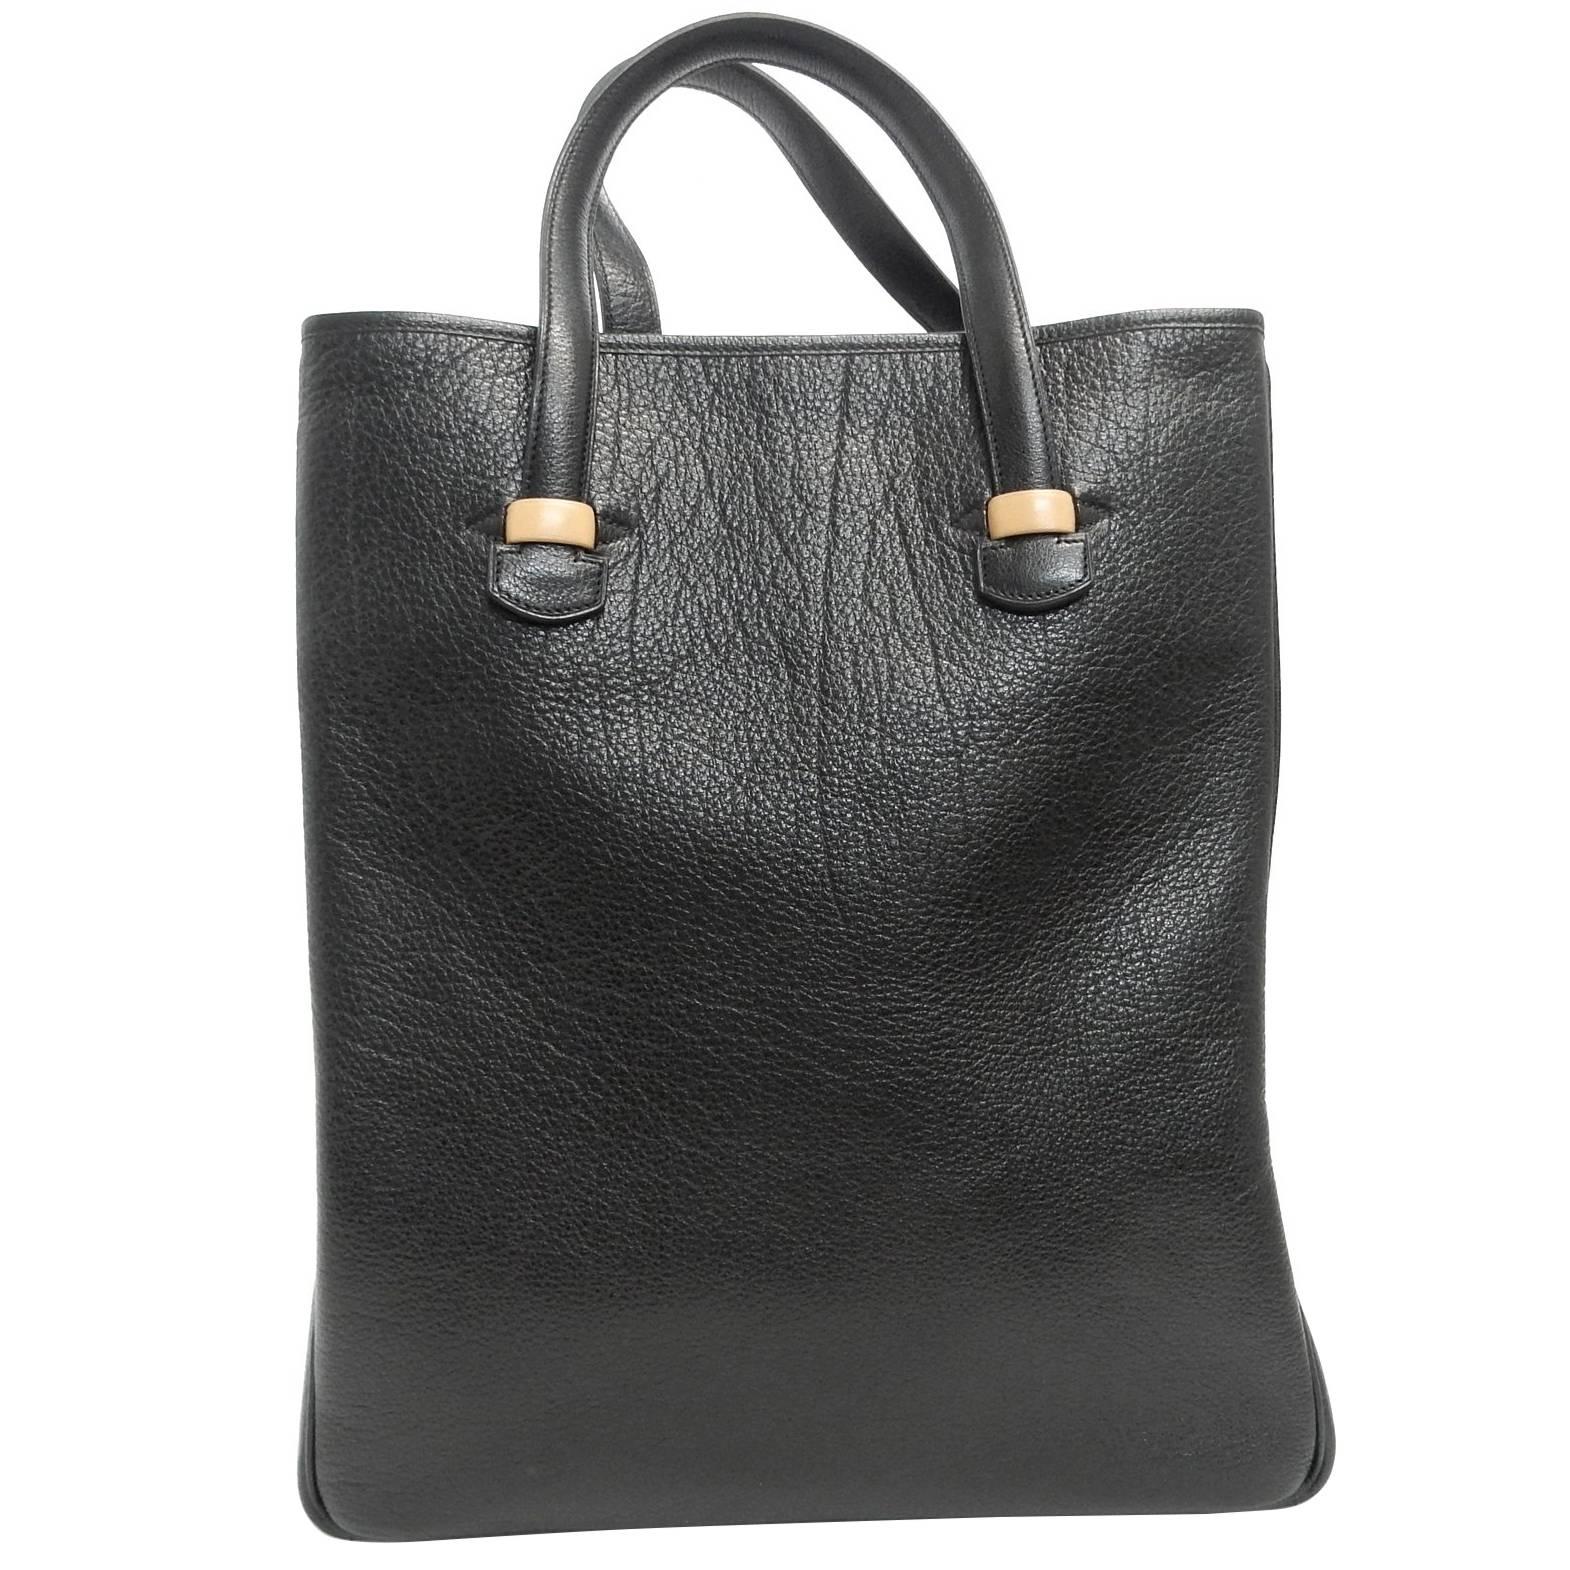 Hermes Black Calf Leather Tote Bag 